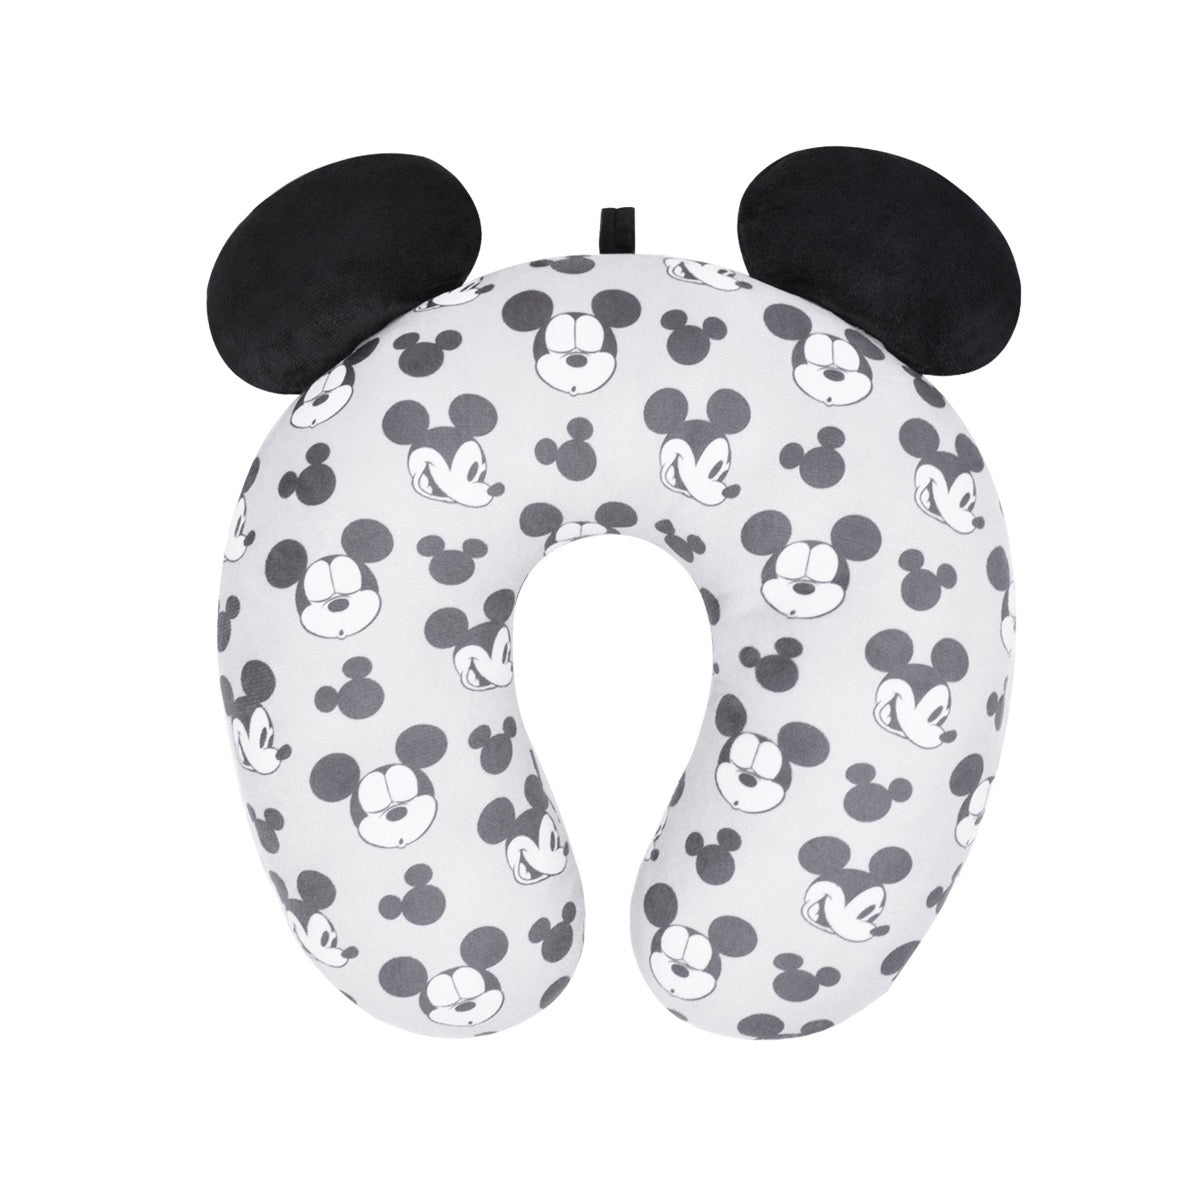 Disney Mickey Mouse faces icons travel neck pillow black grey